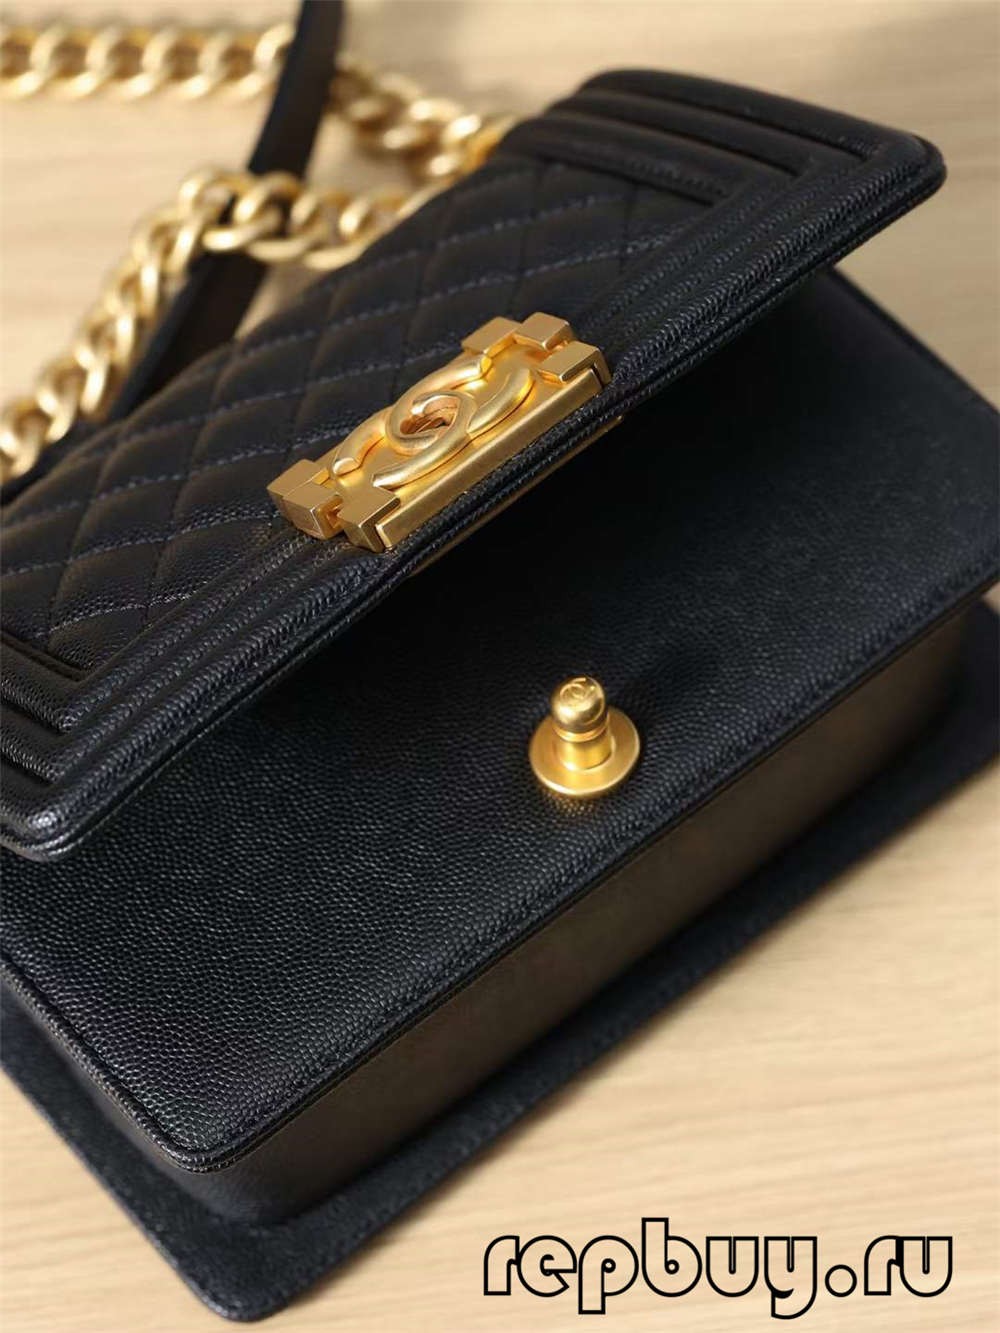 Chanel Le boy top replica handbags small gold buckle latch detail (2022 Updated)-Best Quality Fake designer Bag Review, Replica designer bag ru